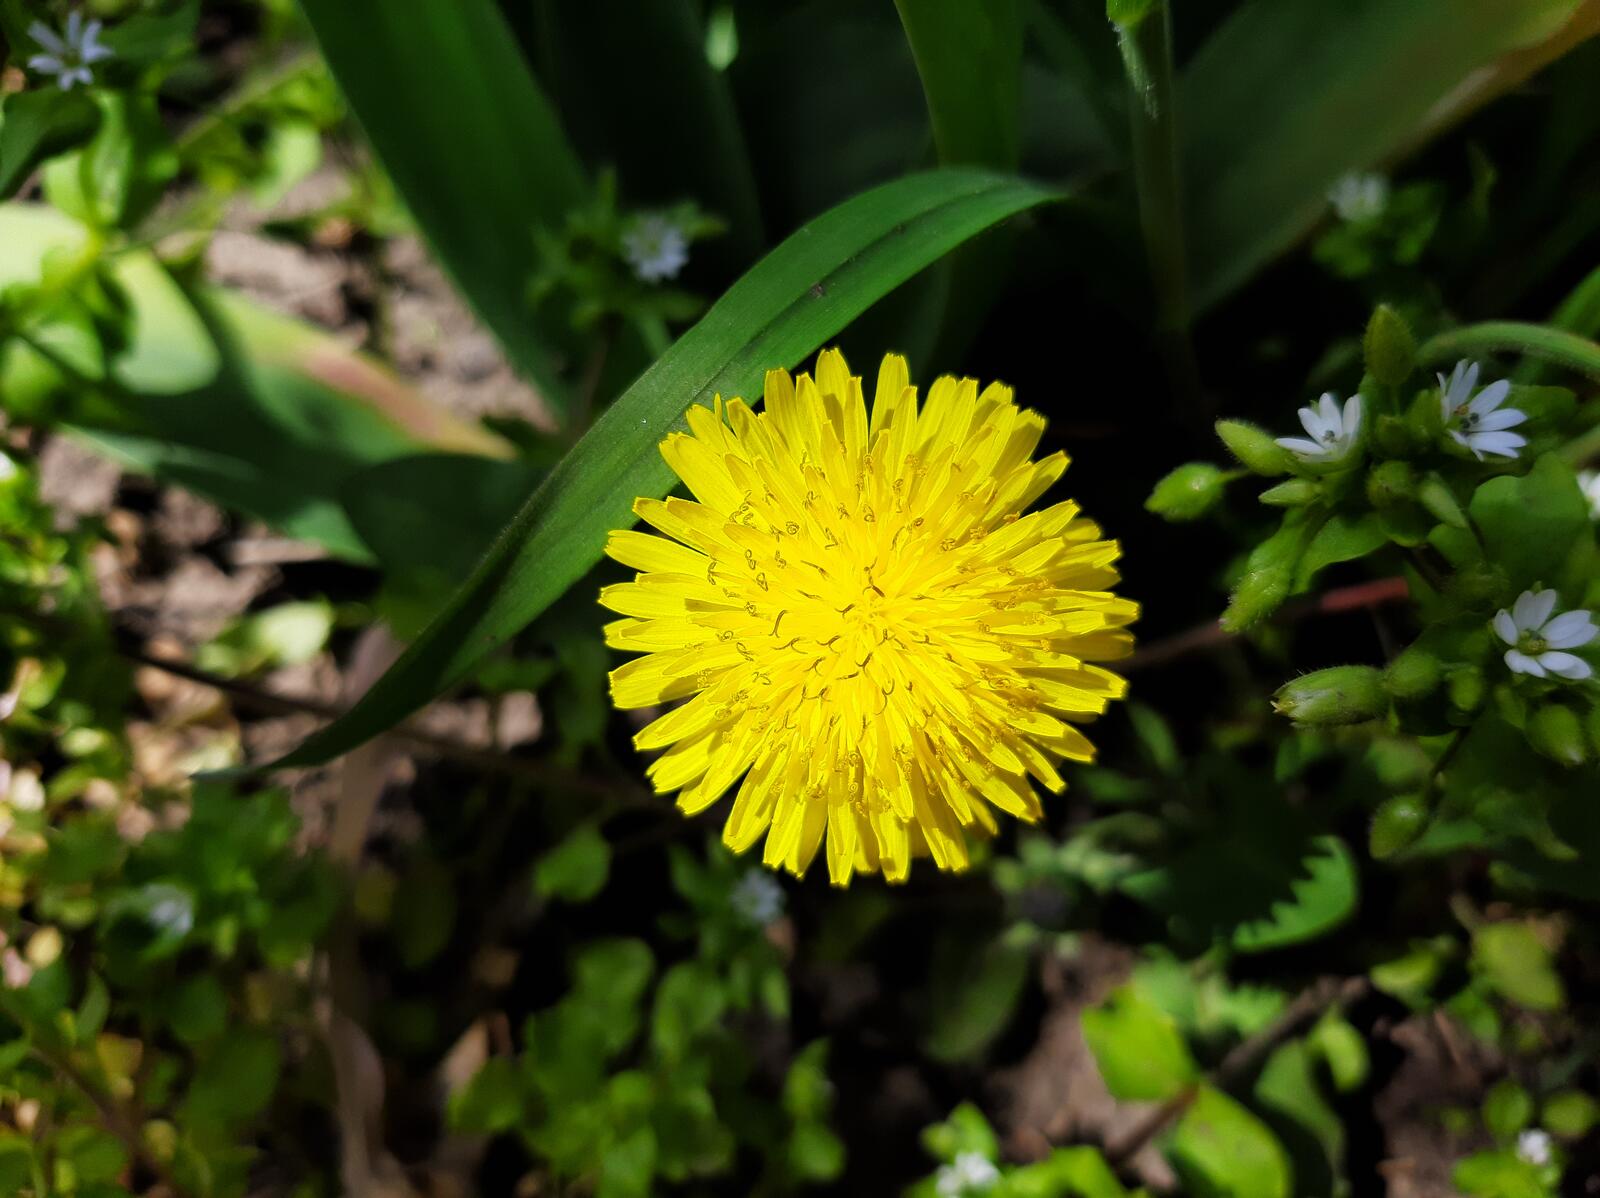 Free photo A dandelion flower among the green grass